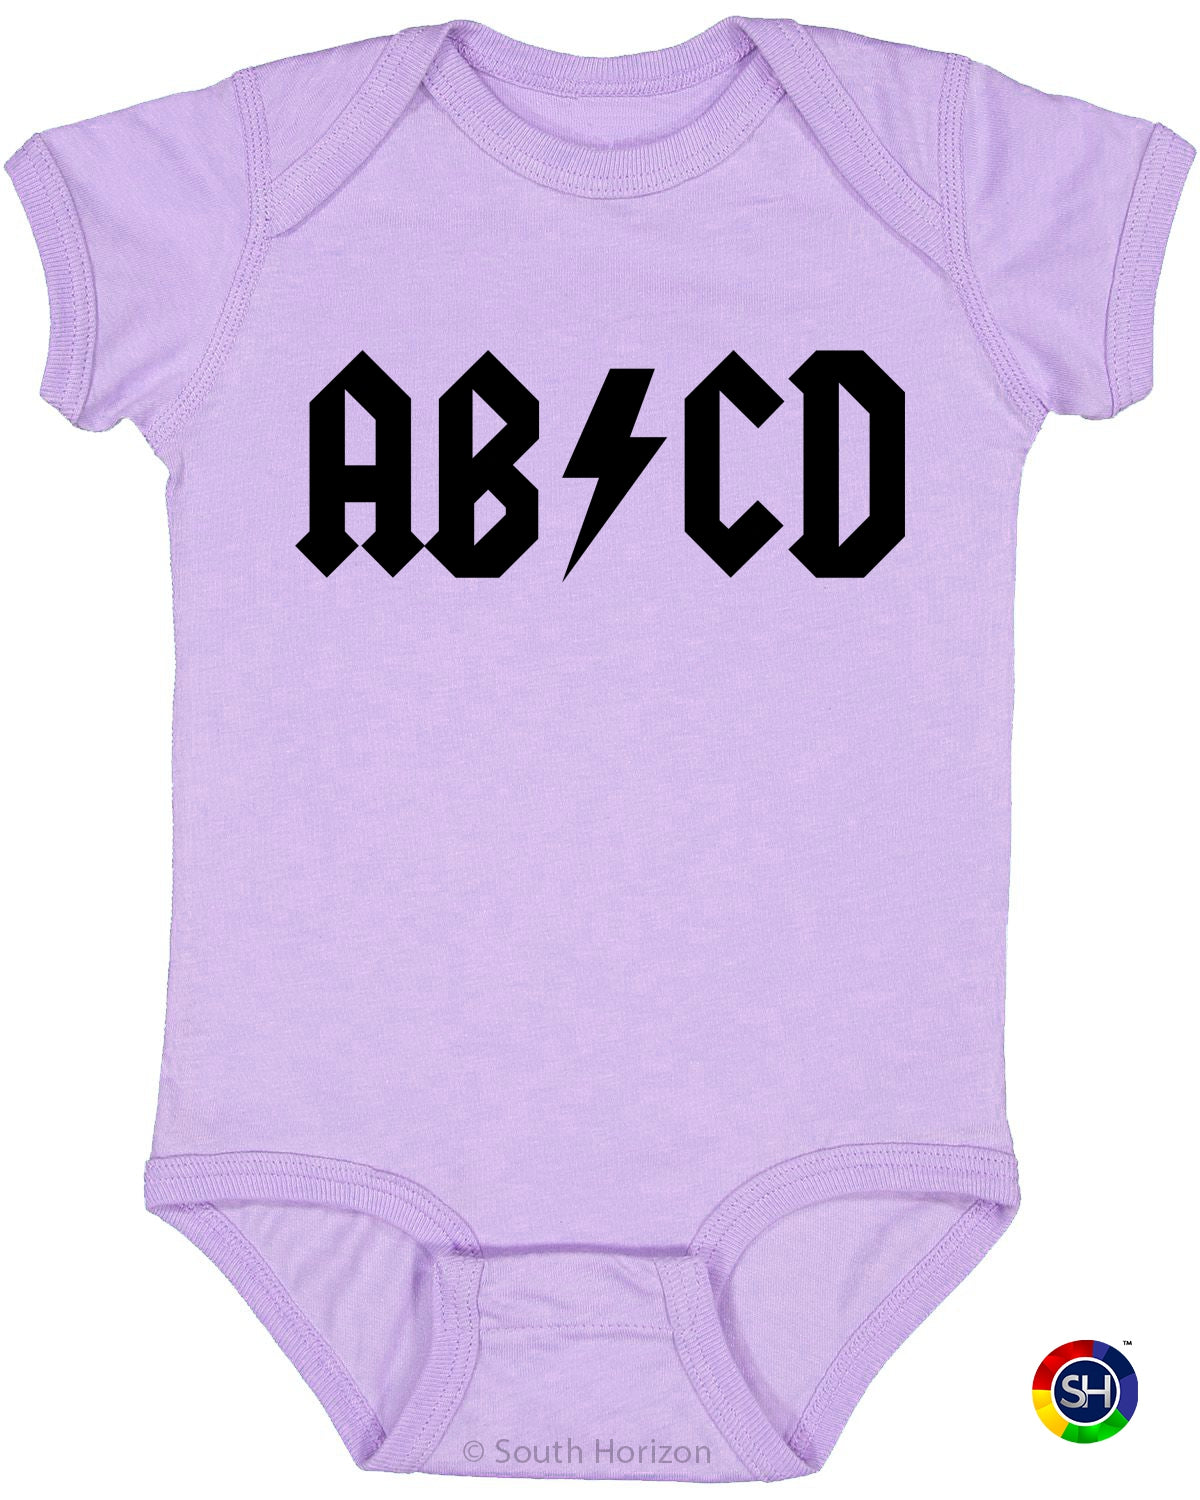 AB/CD Infant BodySuit (#974-10)